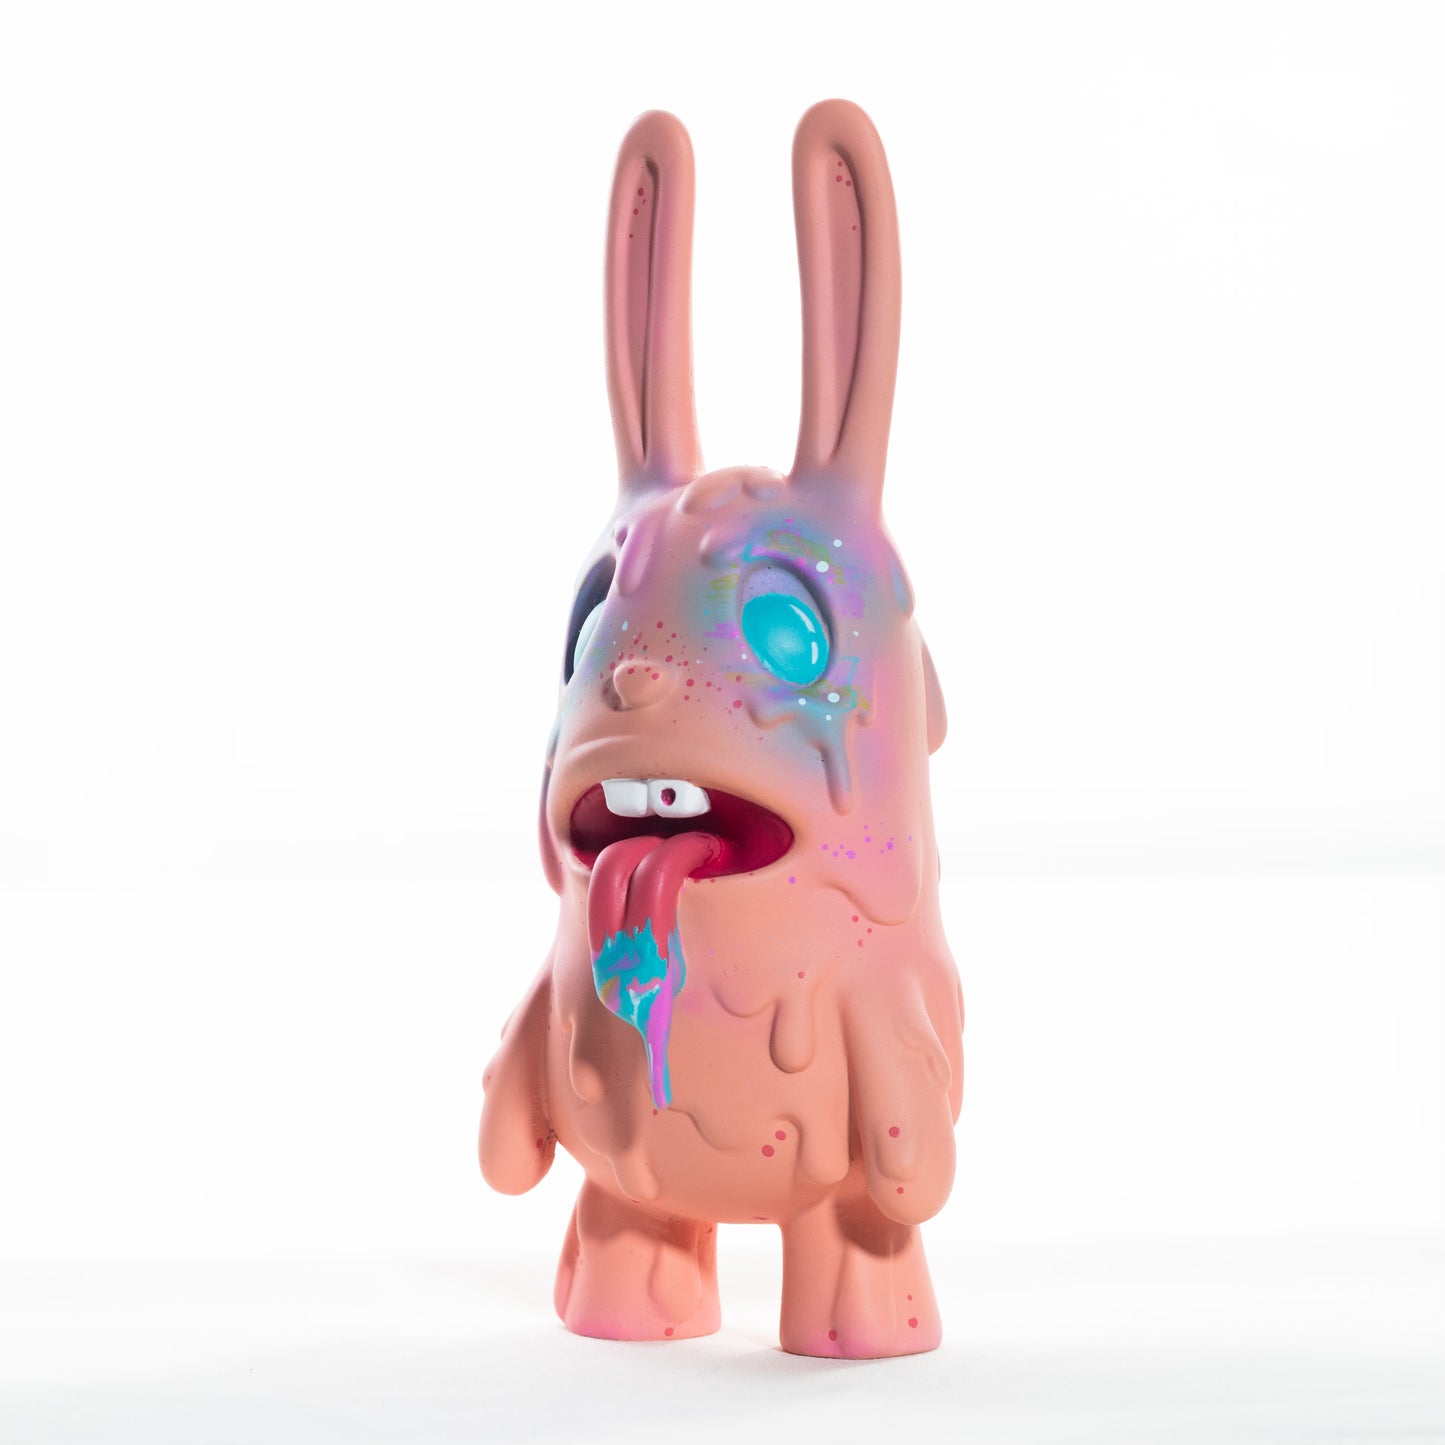 Halo-Eyed Zombie Bunny